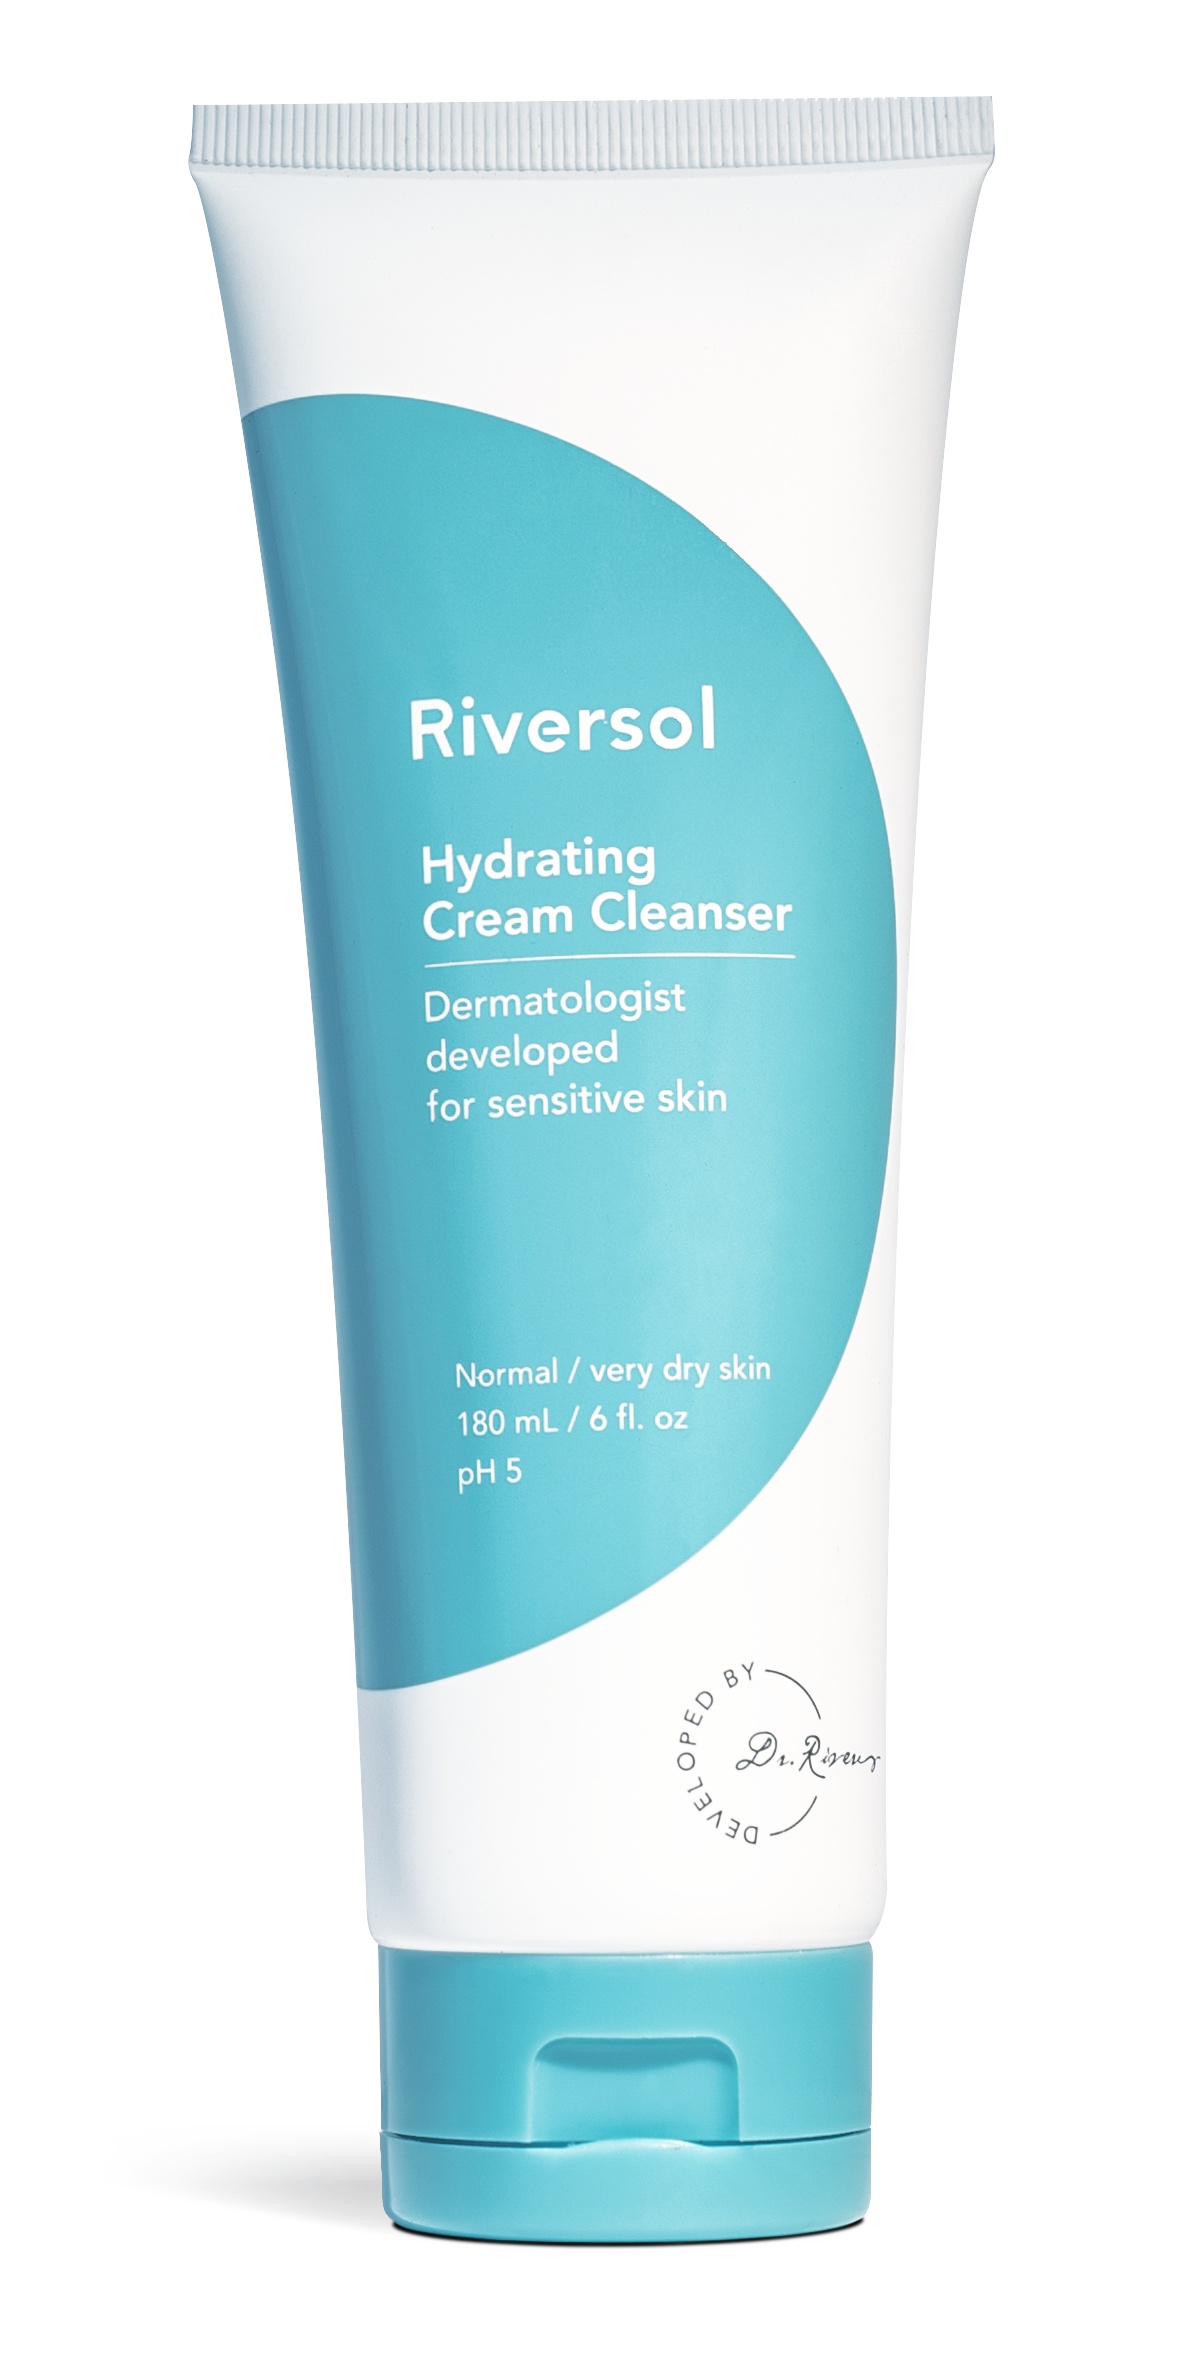 Riversol Hydrating Cream Cleanser